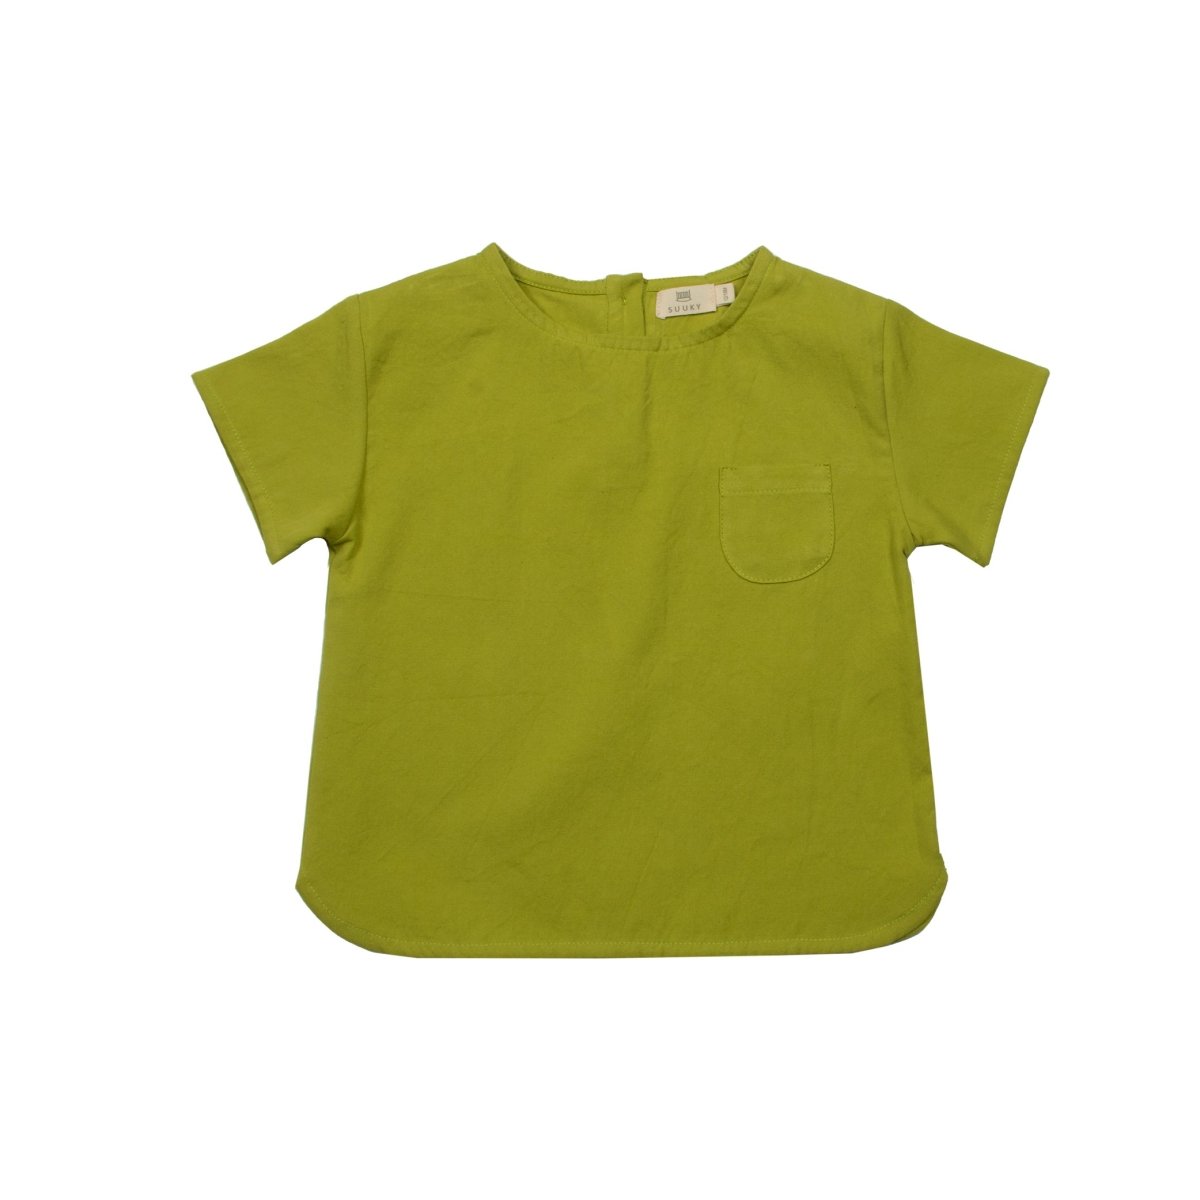 Soft Cotton Baby Shirt - Suuky Porto